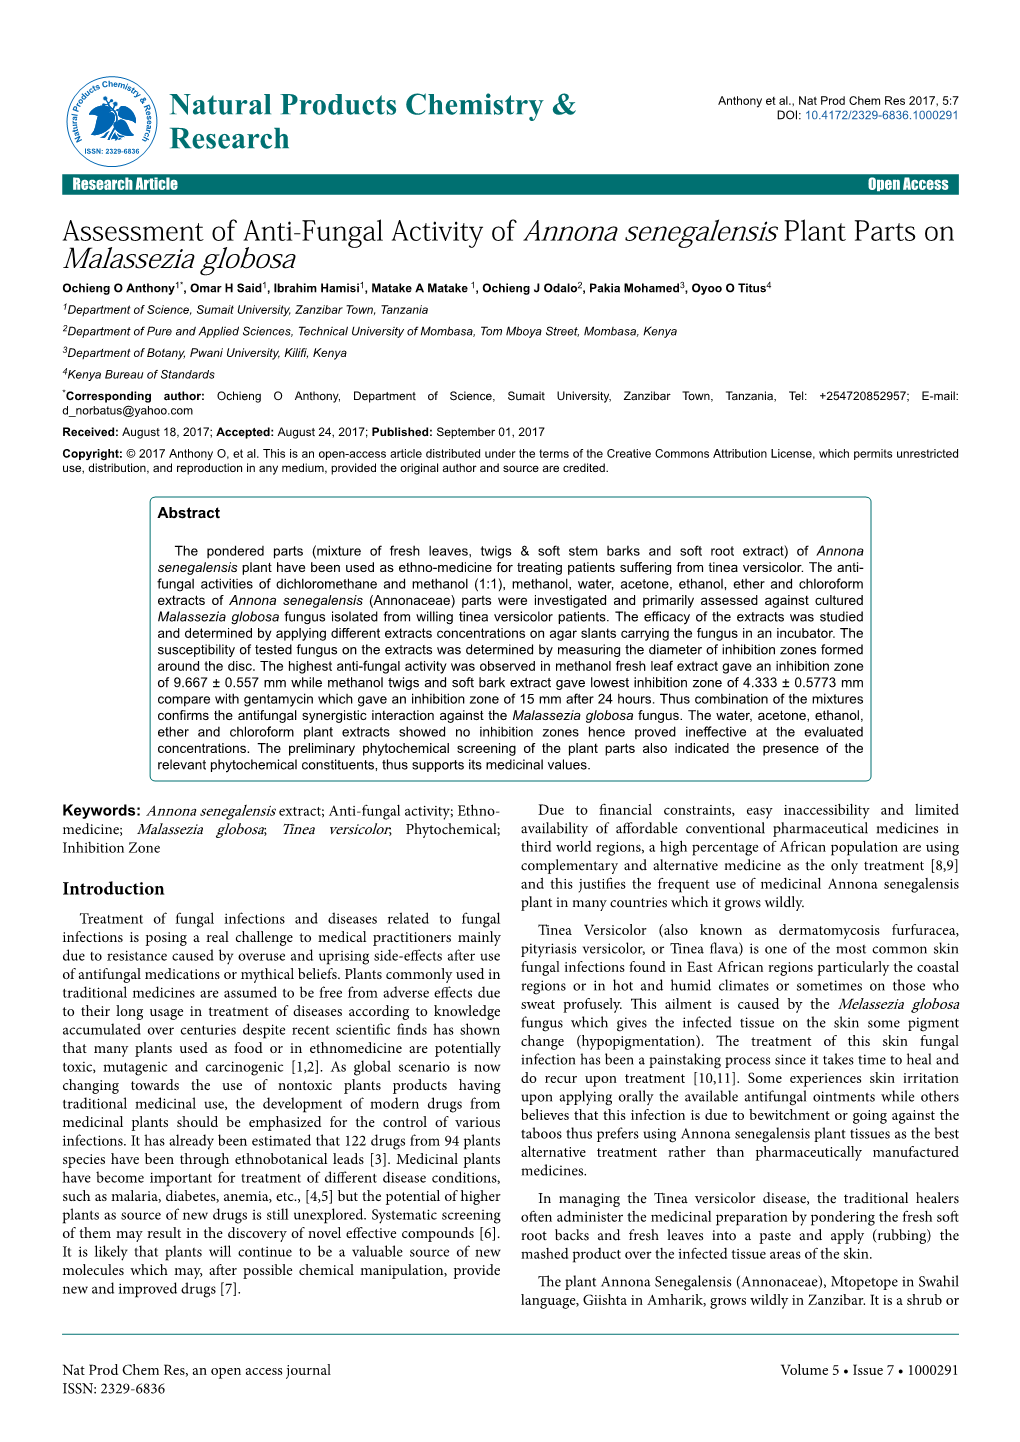 Assessment of Anti-Fungal Activity of Annona Senegalensis Plant Parts